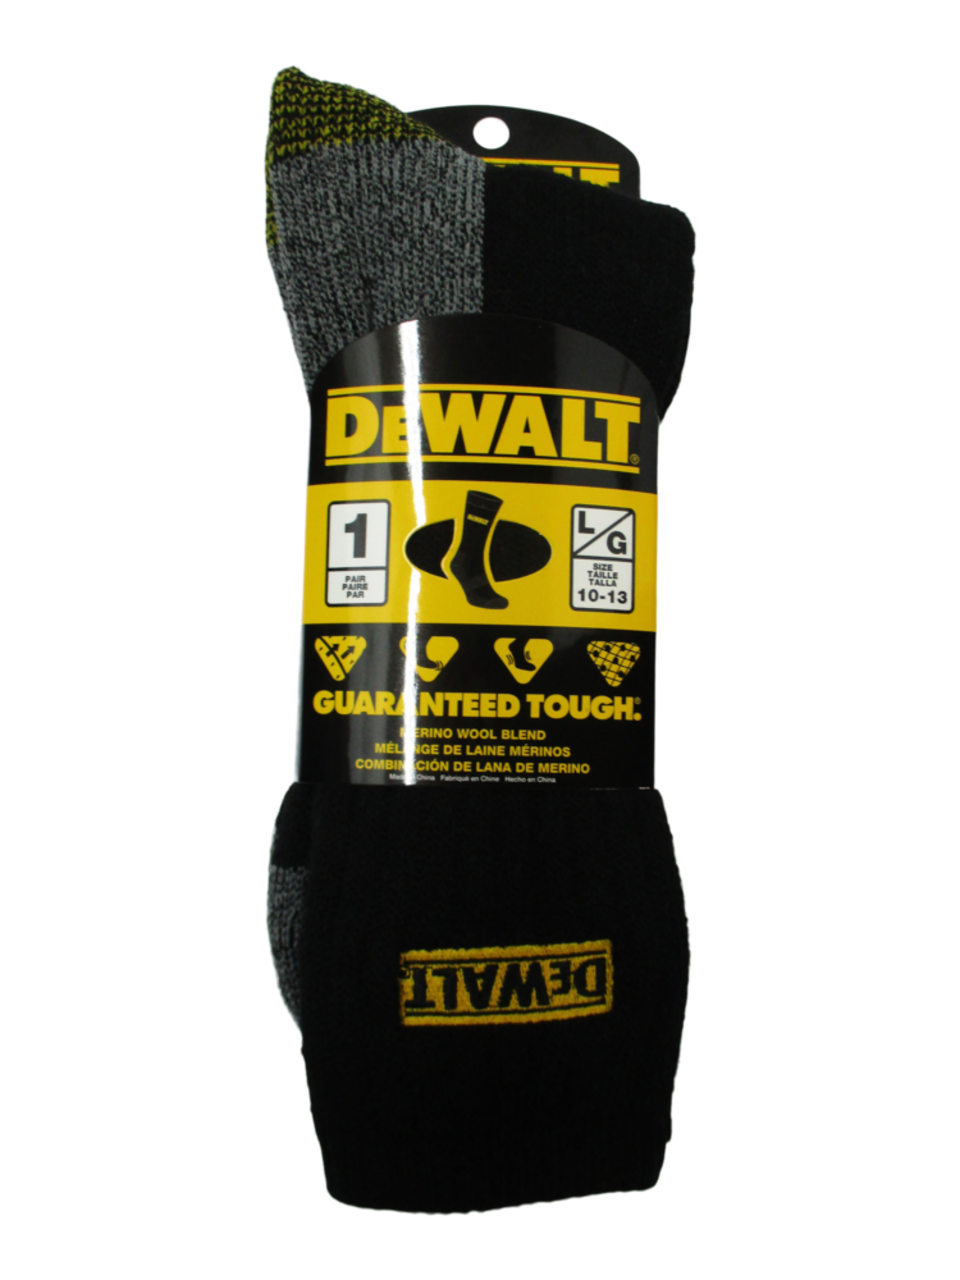 DEWALT Men's Everyday Cotton Blend Work Socks, Reinforced Heel/Toe, 3-pk,  Black